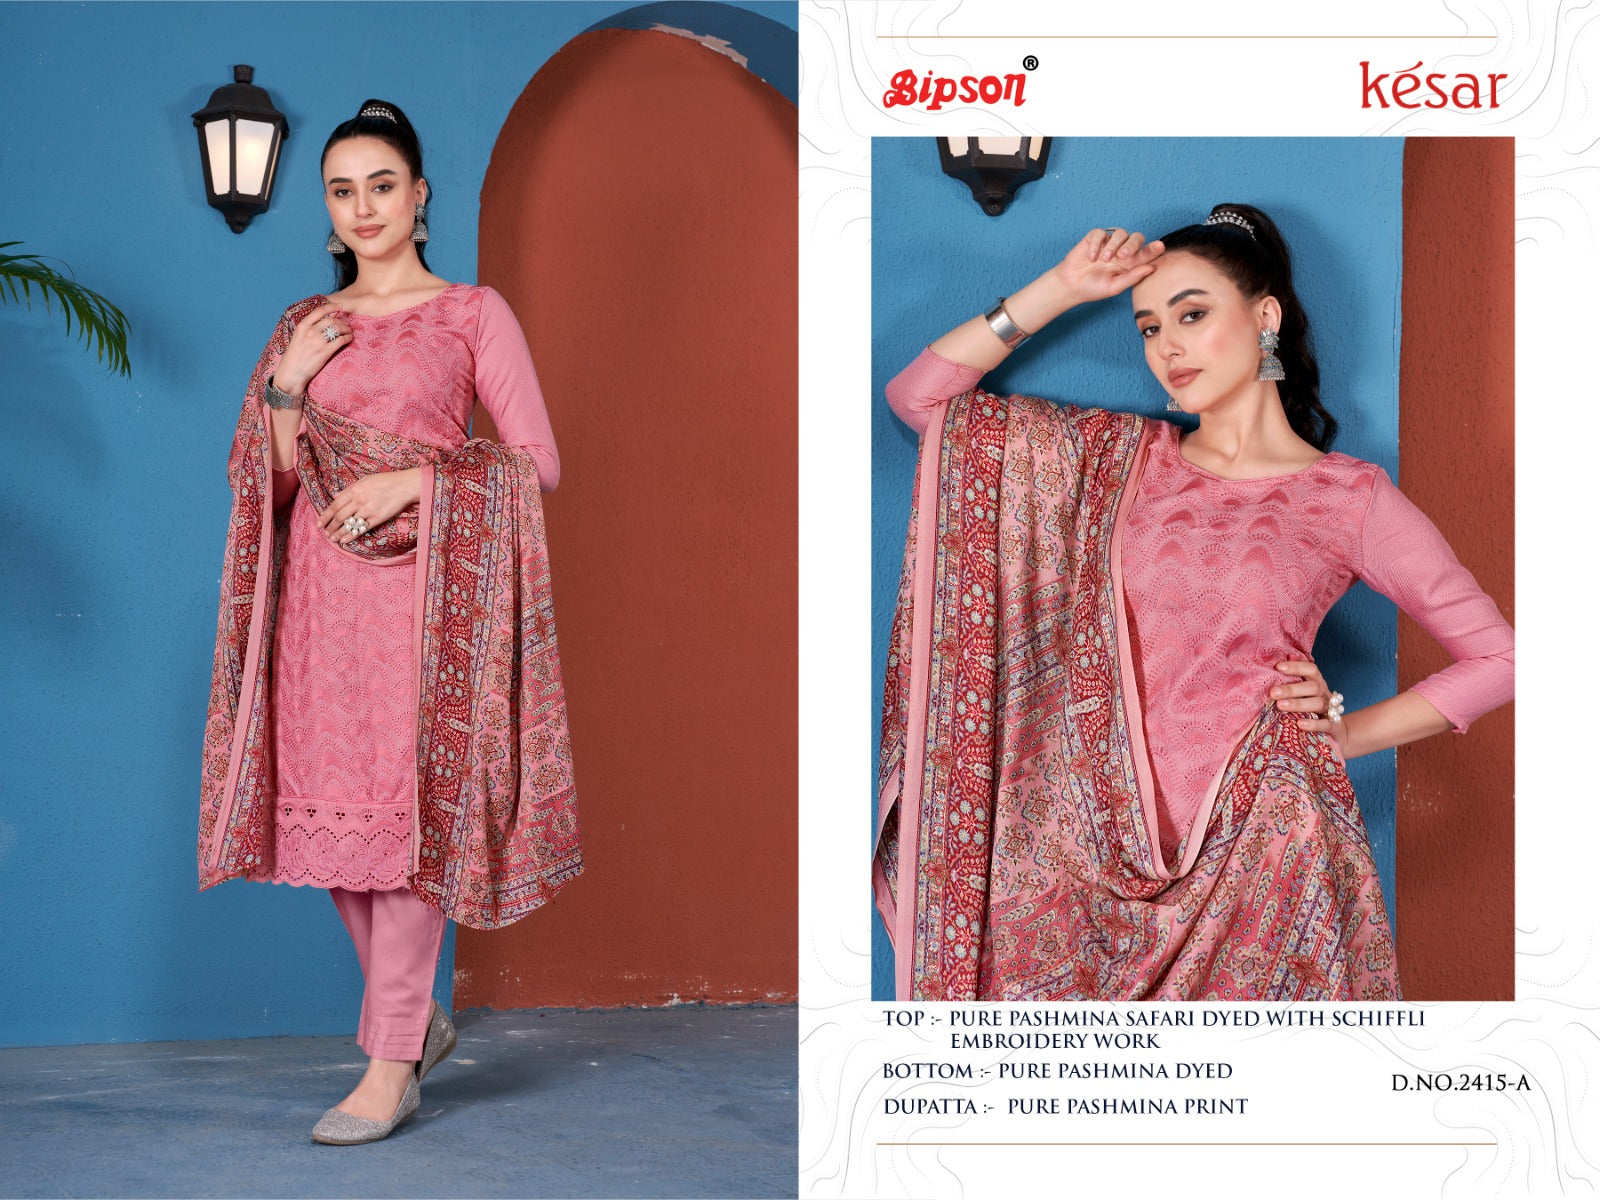 Kesar-2415 Bipson Prints Woolen Pashmina Suits